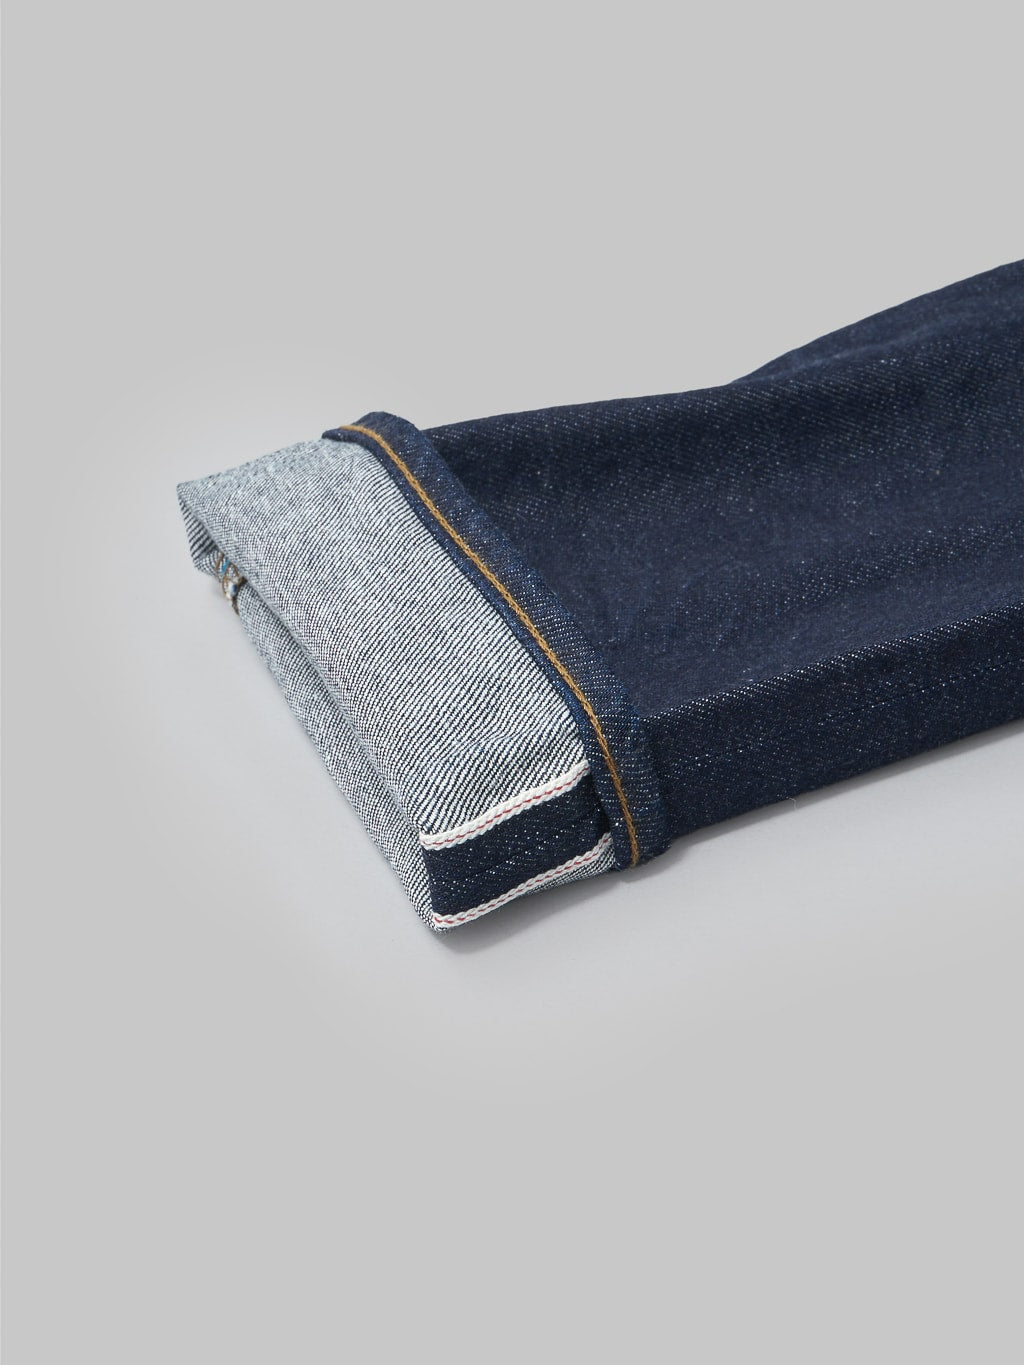 Japan Blue J205 Stretch Circle Tapered denim Jeans selvedge closeup